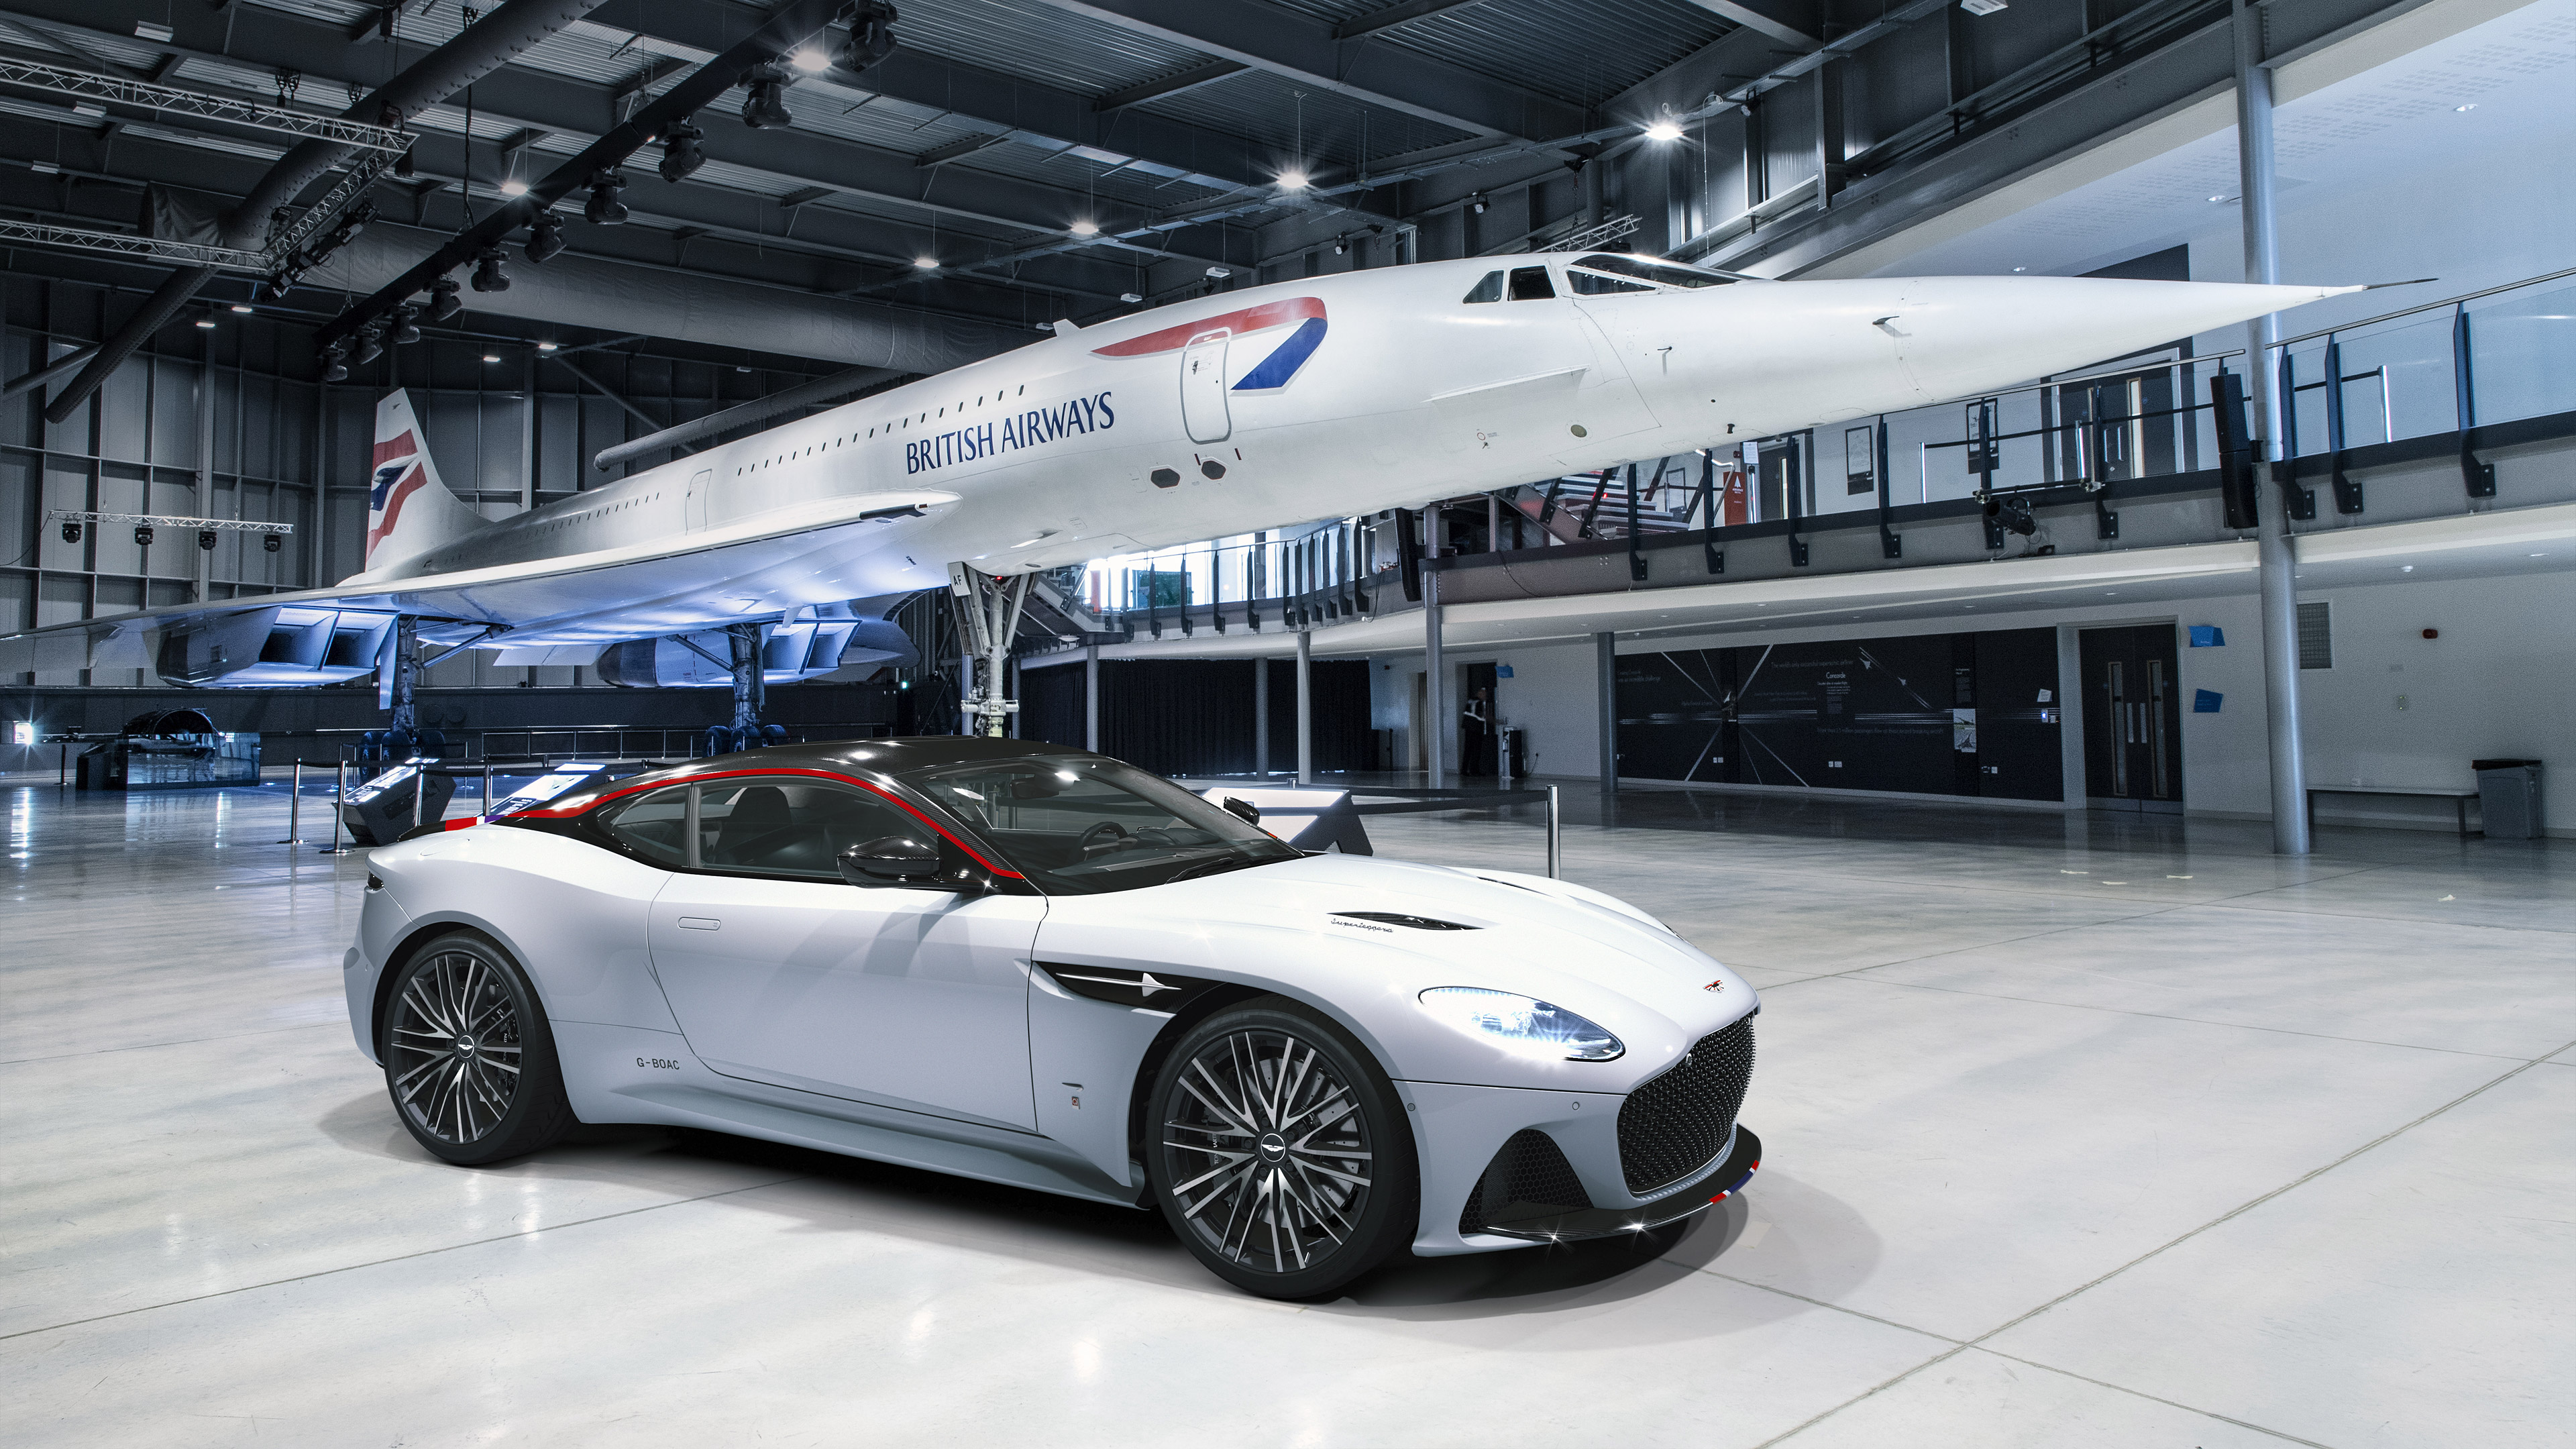  2019 Aston Martin DBS Superleggera Concorde Edition= Wallpaper.